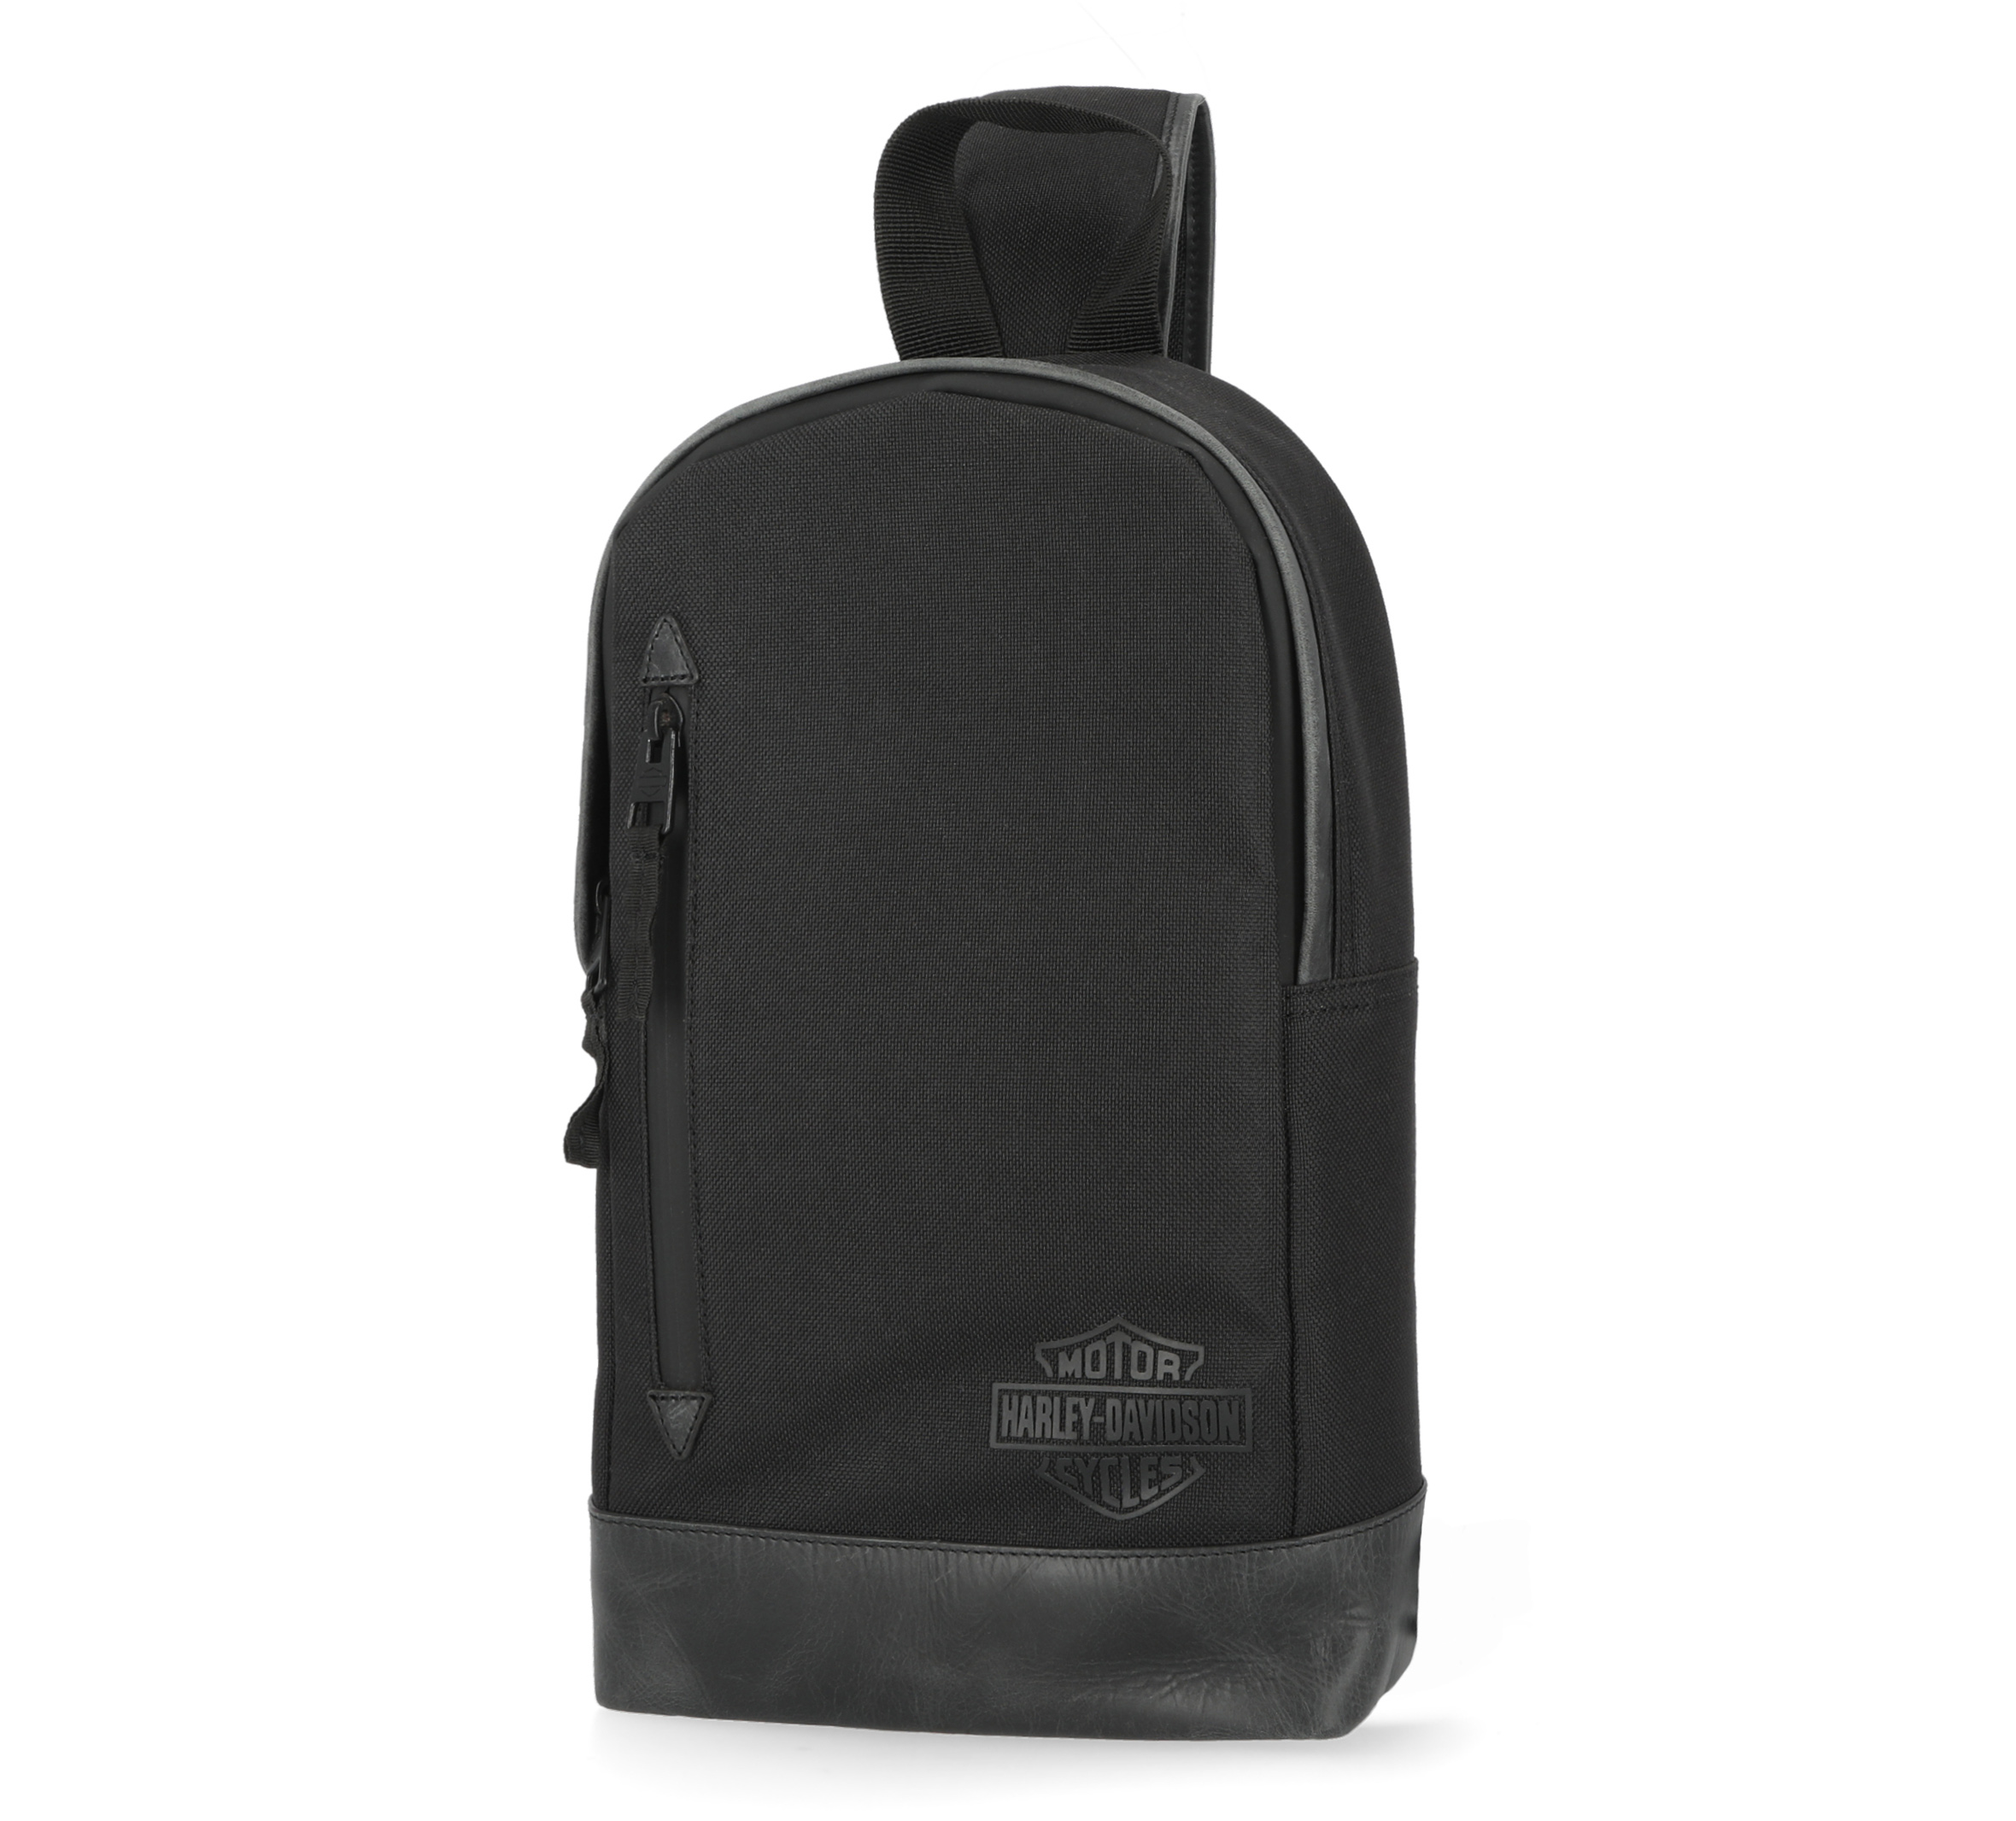 Harley-Davidson Rugged Twill Water-Resistant Polyester Backpack - Black |  eBay